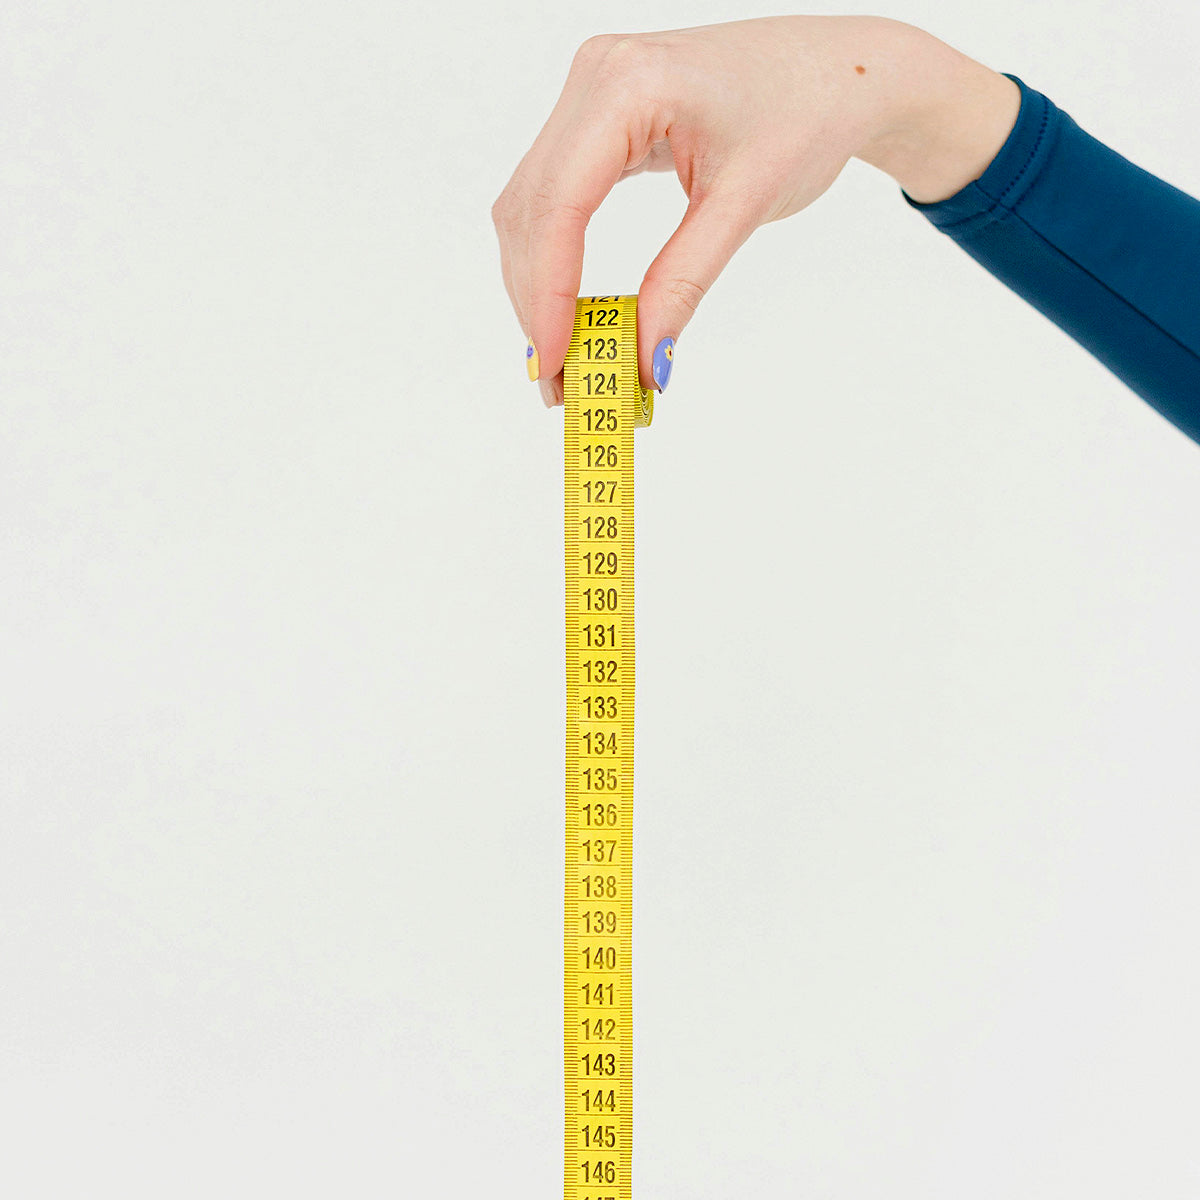 Use measure tape to size your sheepskin footwear